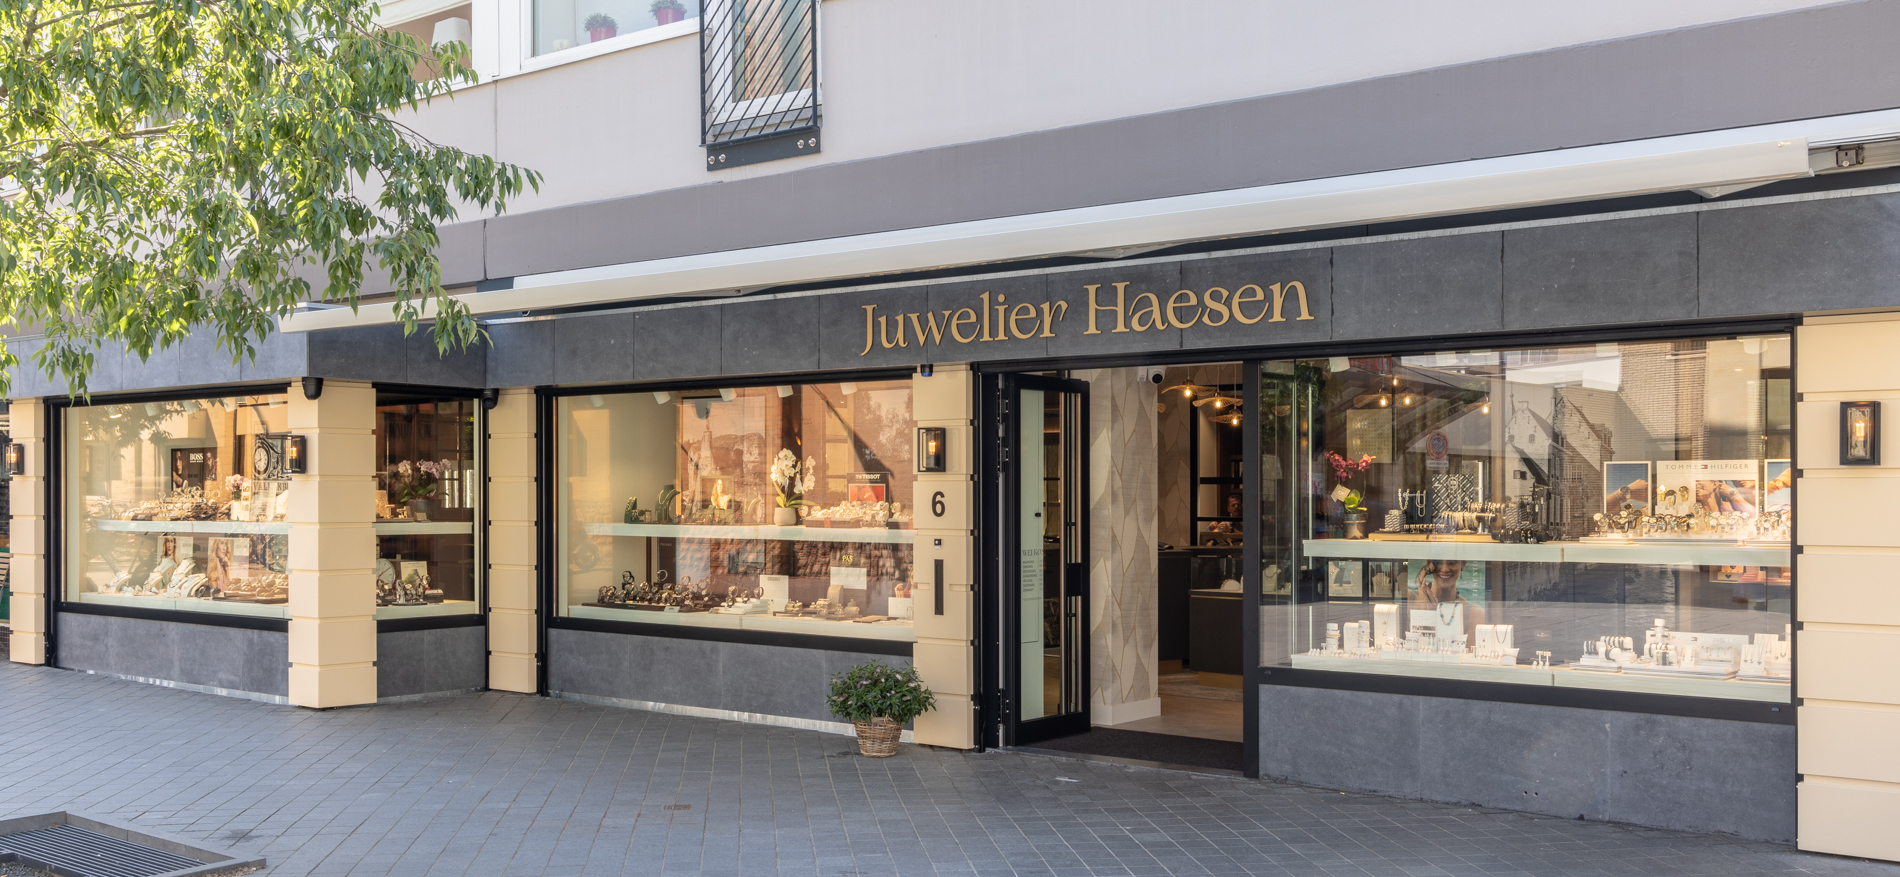 Juwelier Haesen | Valkenburg - Juweliers